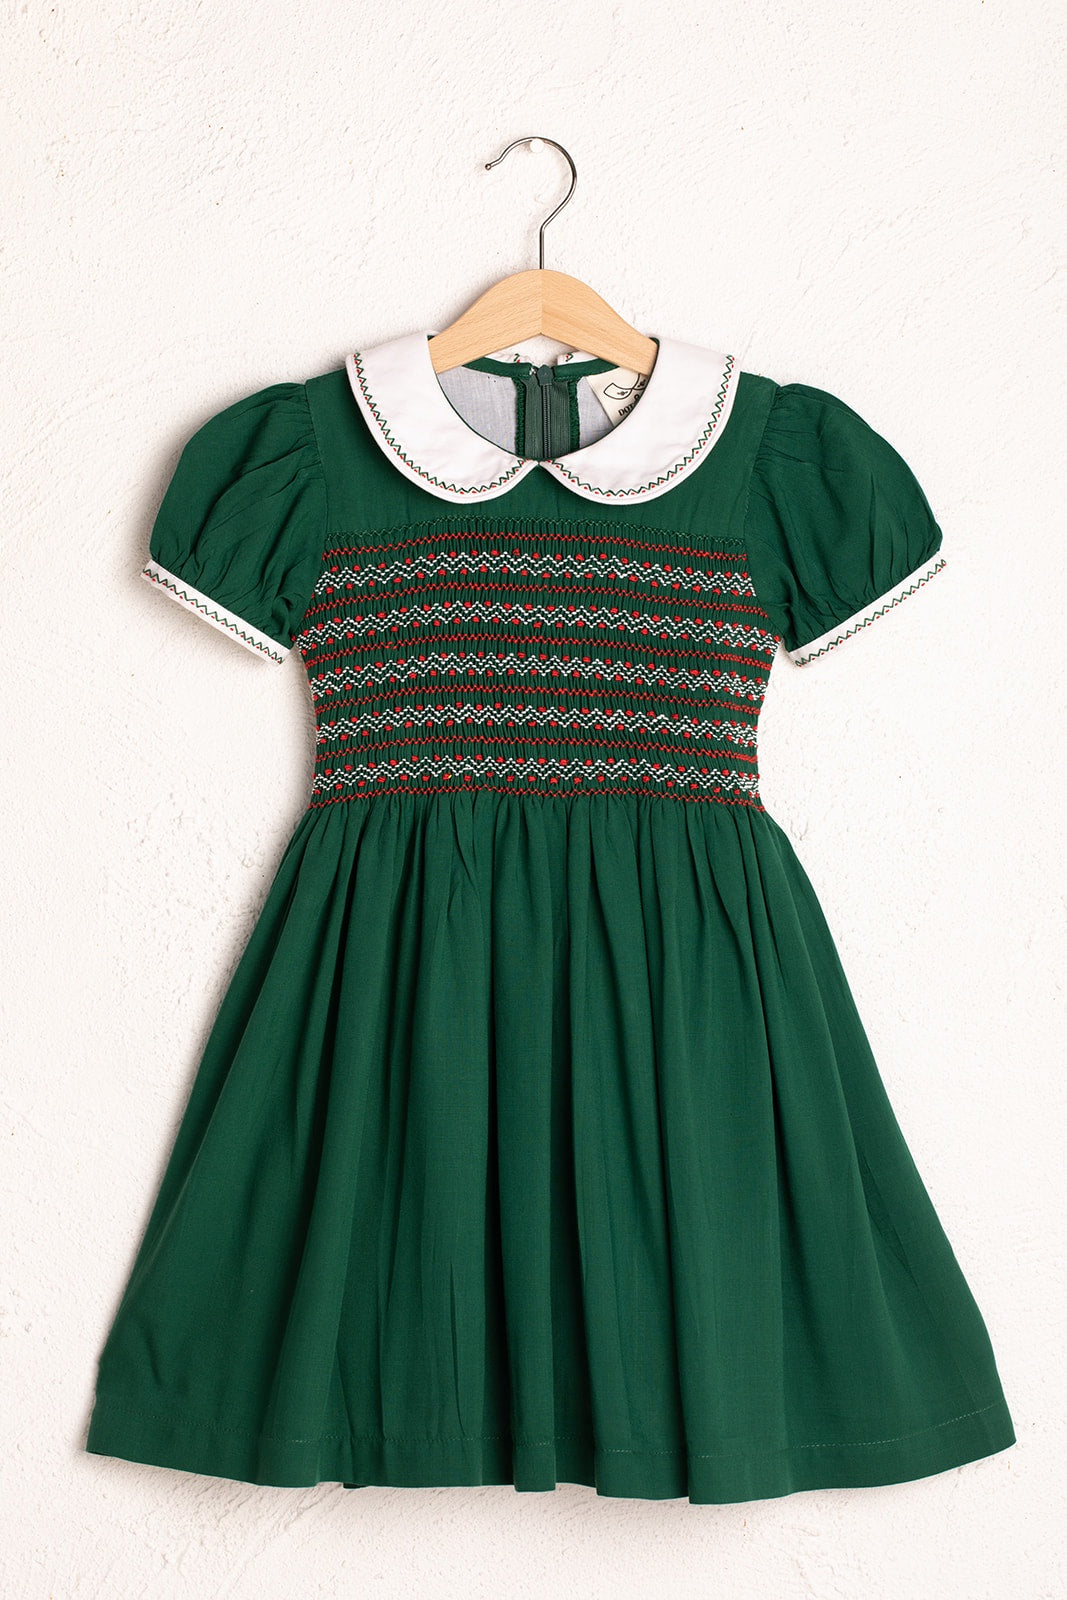 Dot & Mila Green Smocked Dress Size 4